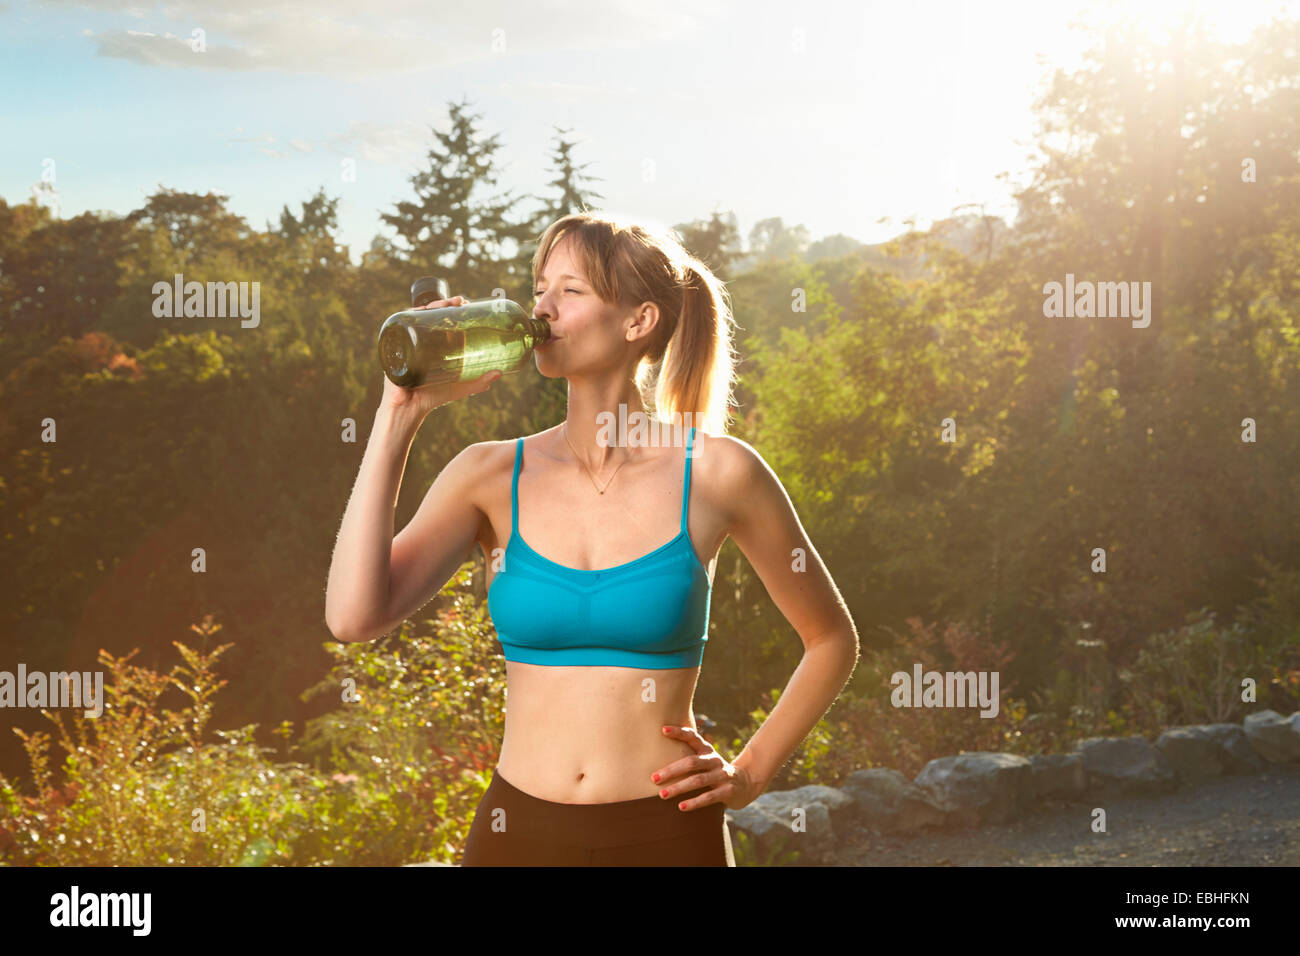 Mid adult female runner taking a water break in park Stock Photo